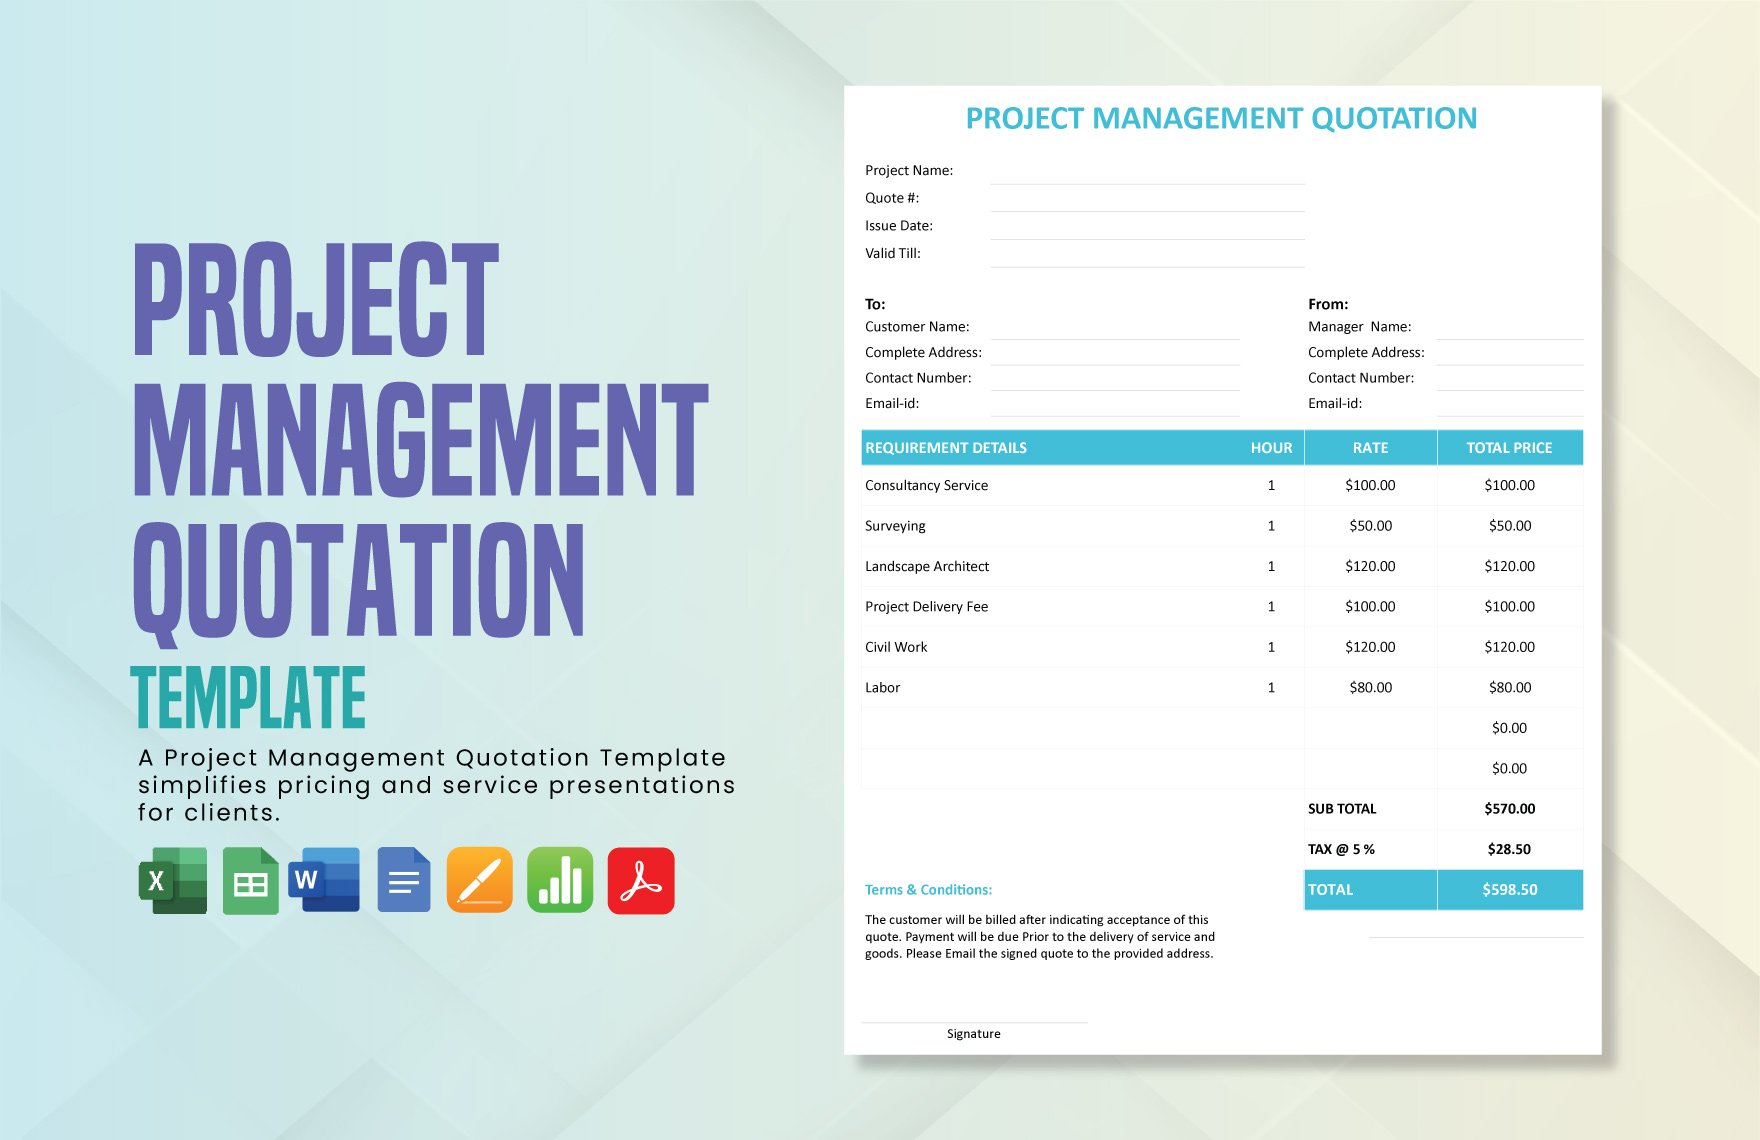 Project Management Quotation Template